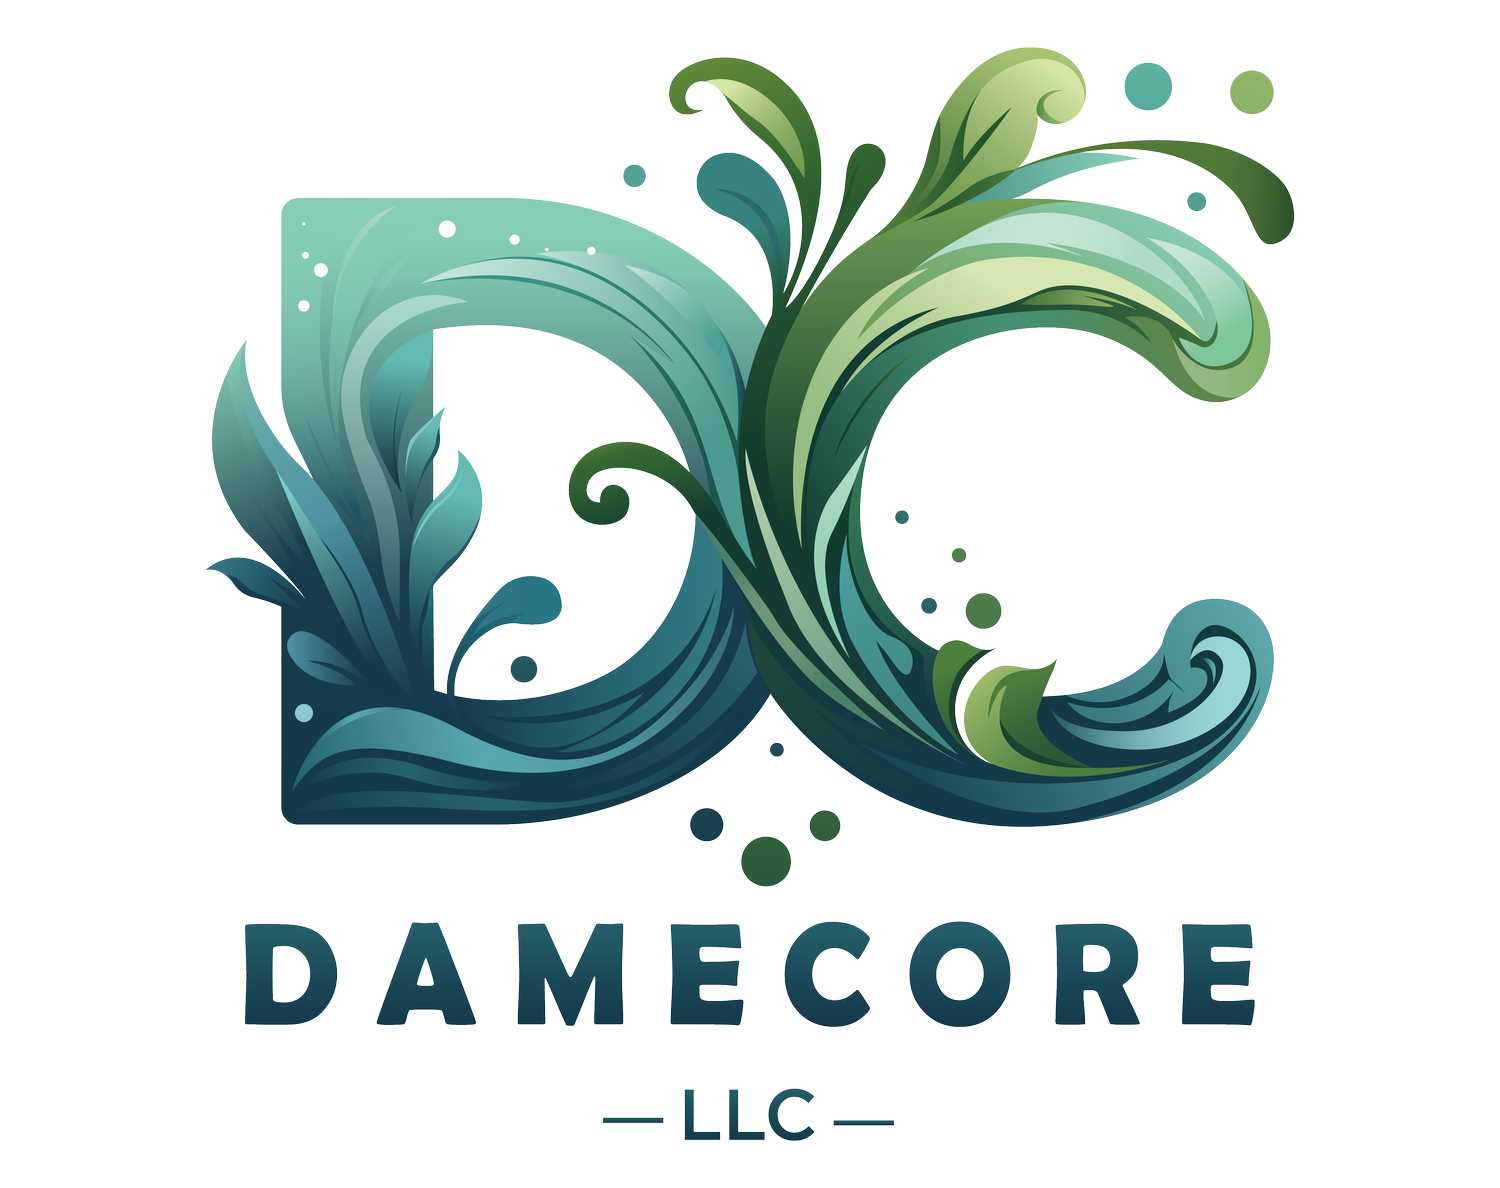 DAMECORE LLC